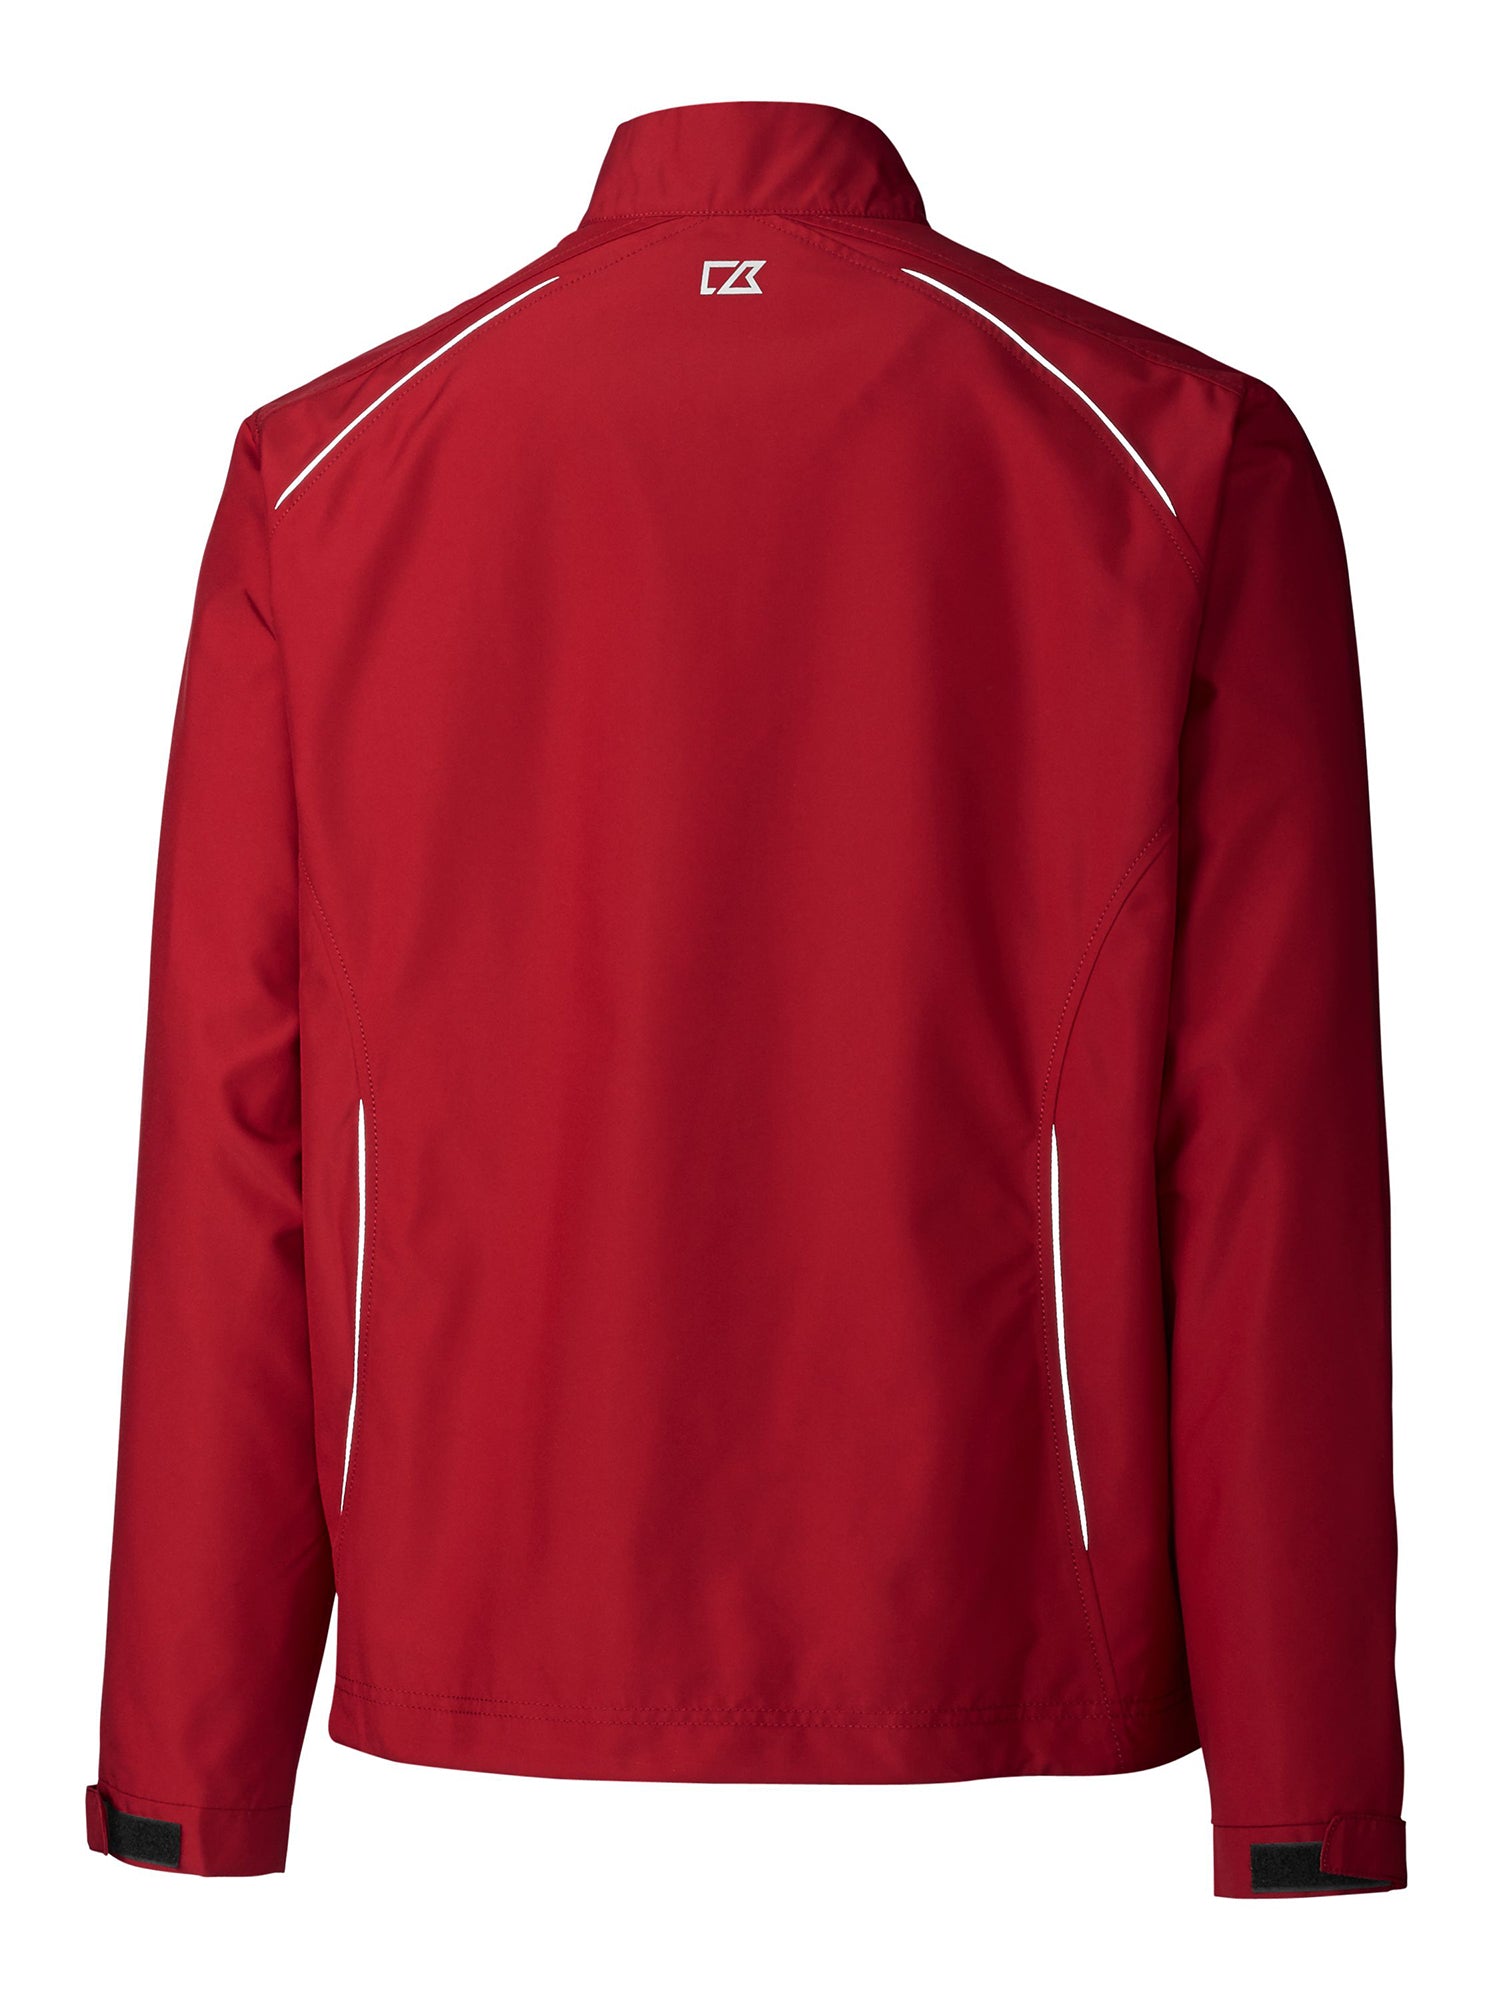 Cutter & Buck Beacon Full Zip Jacket in Cardinal Red - 0